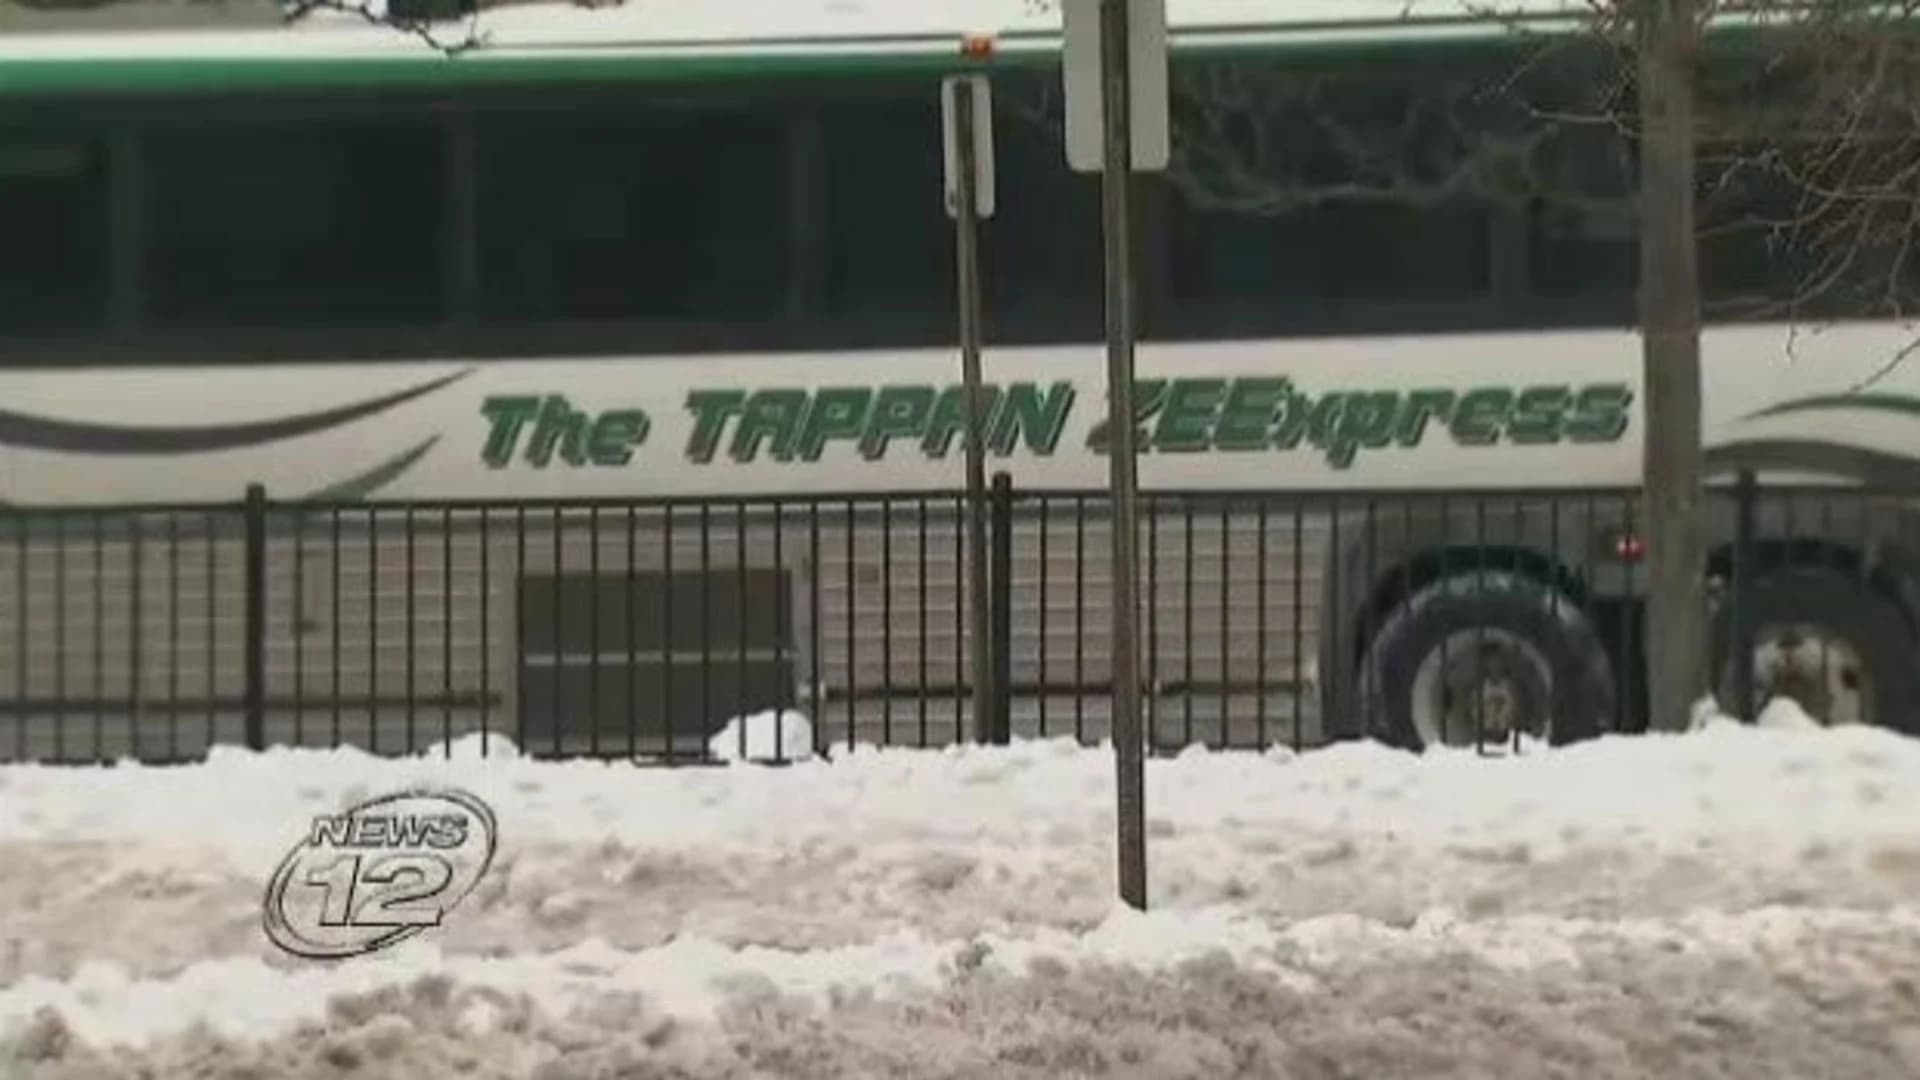 Commuters opt for public transportation after storm